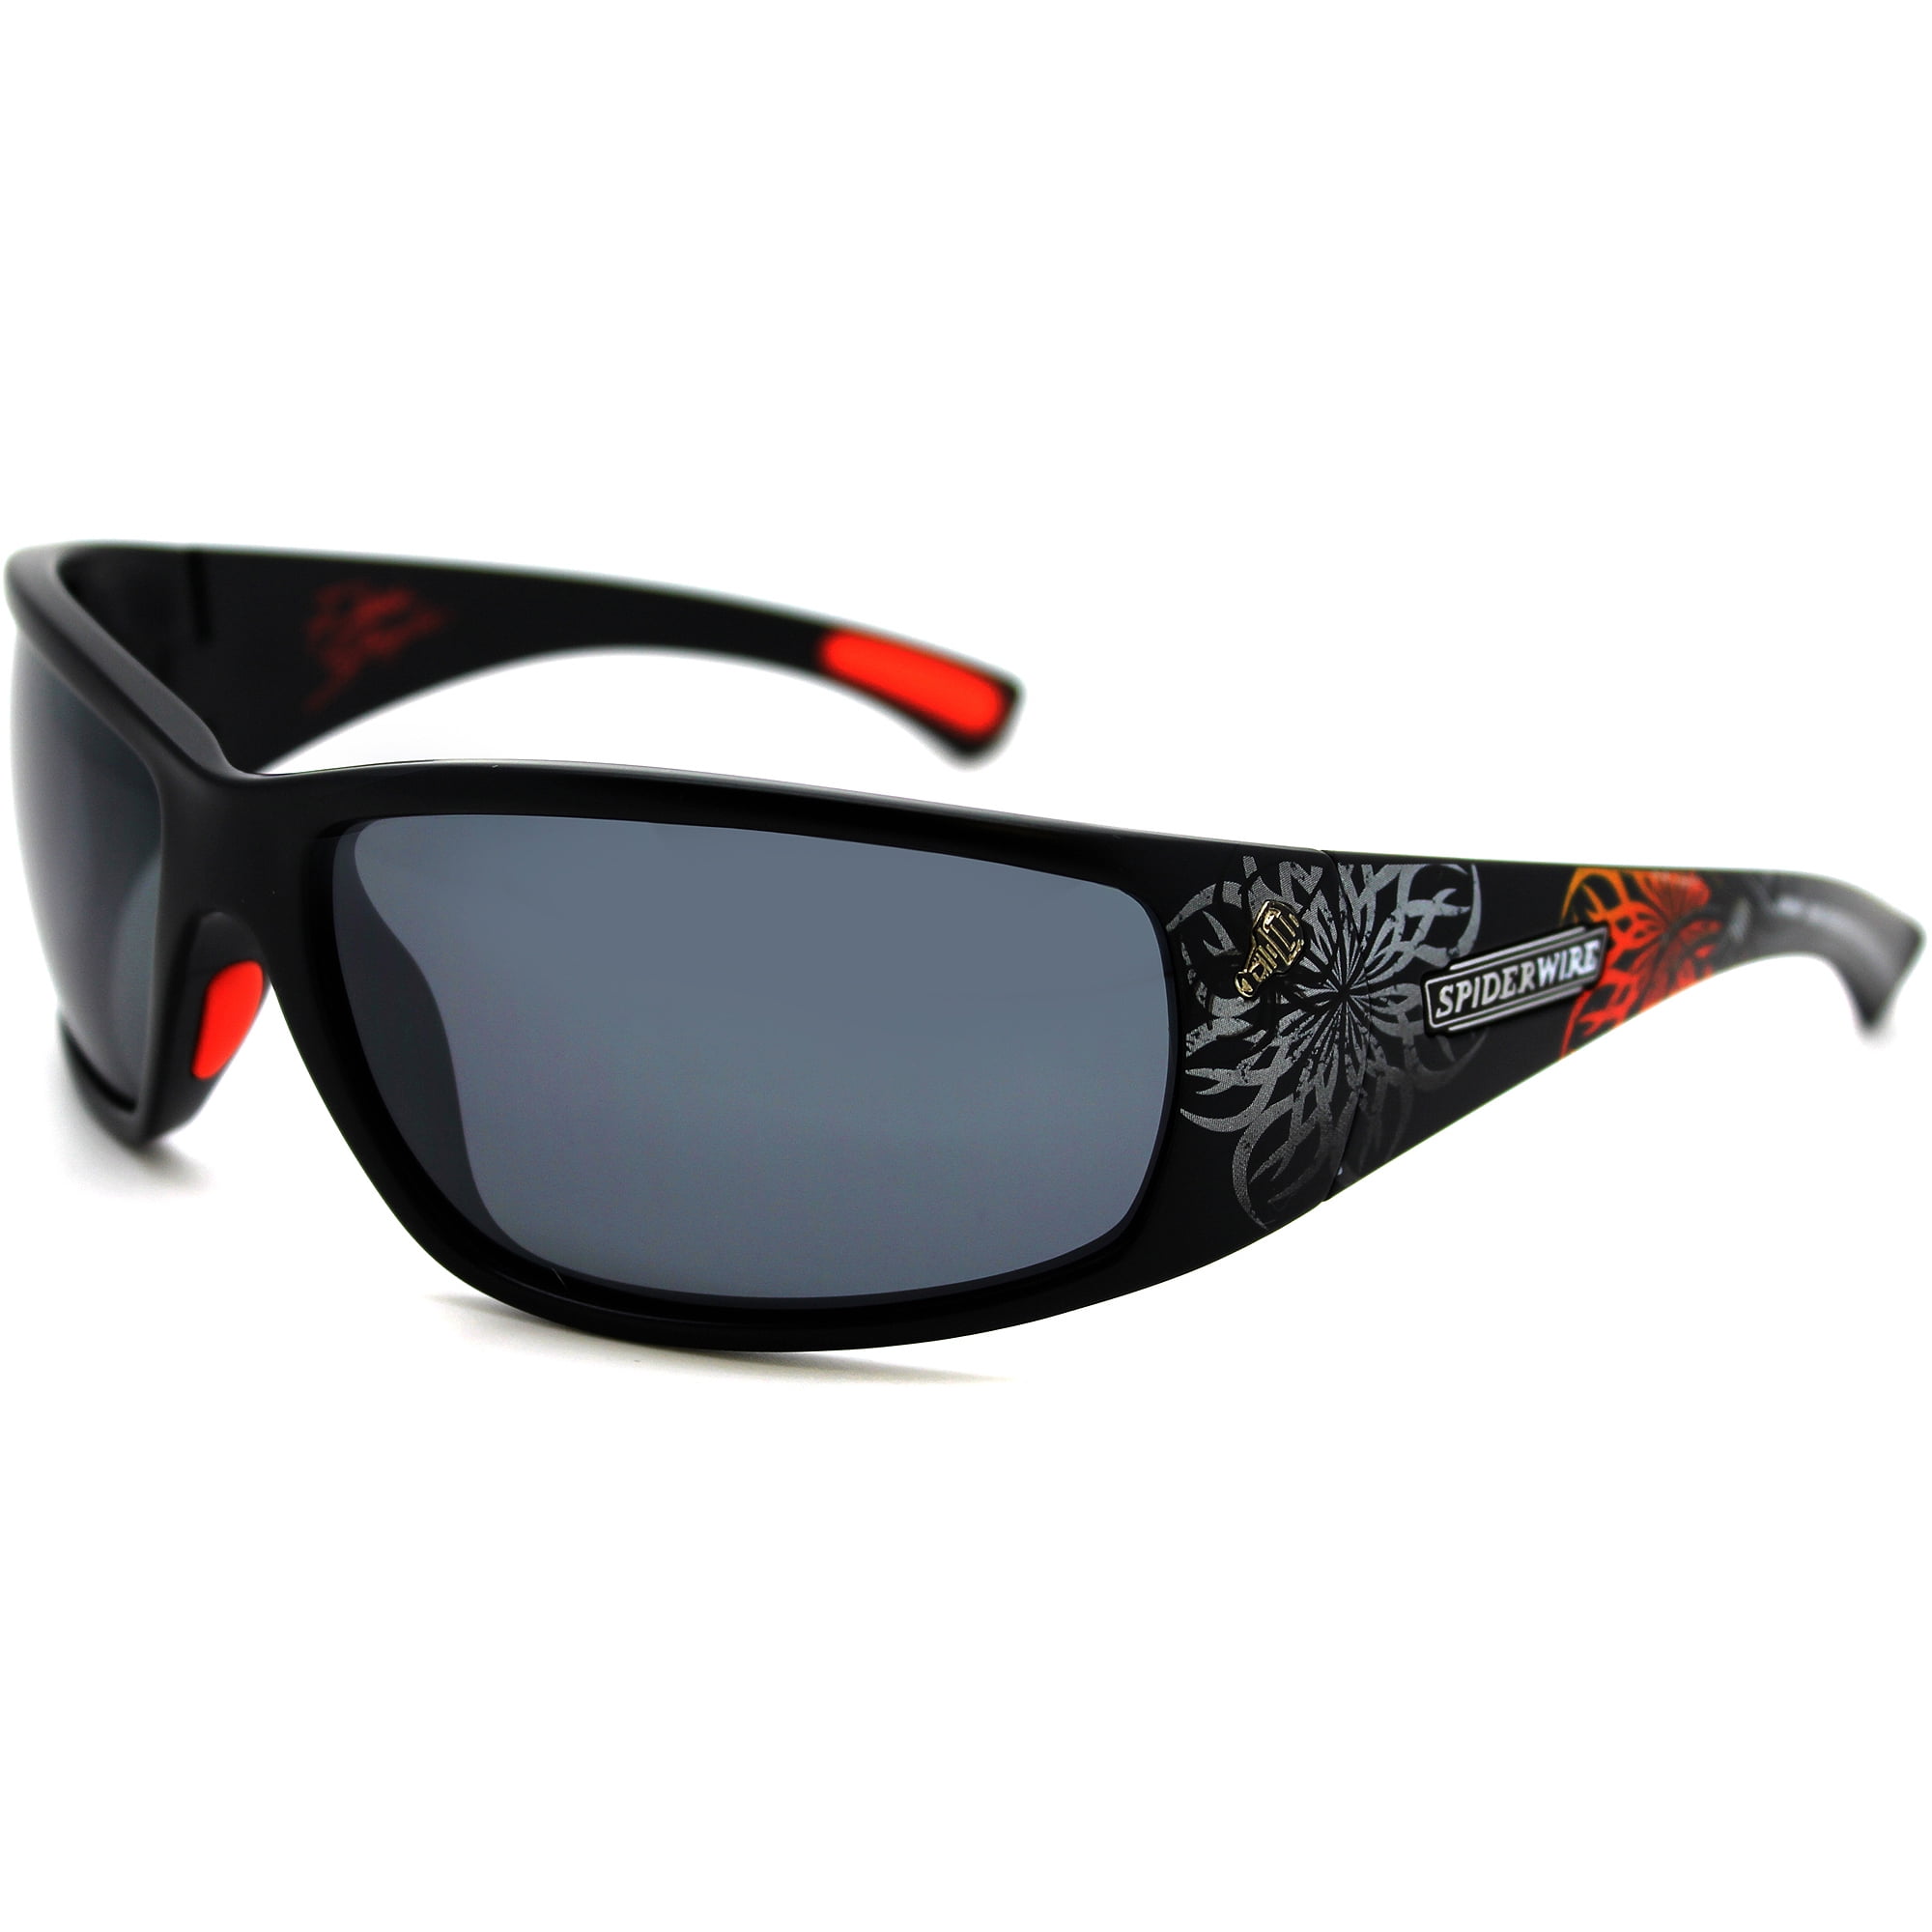 Spiderwire-Fletcher Polarized Fishing Sunglasses, Black with